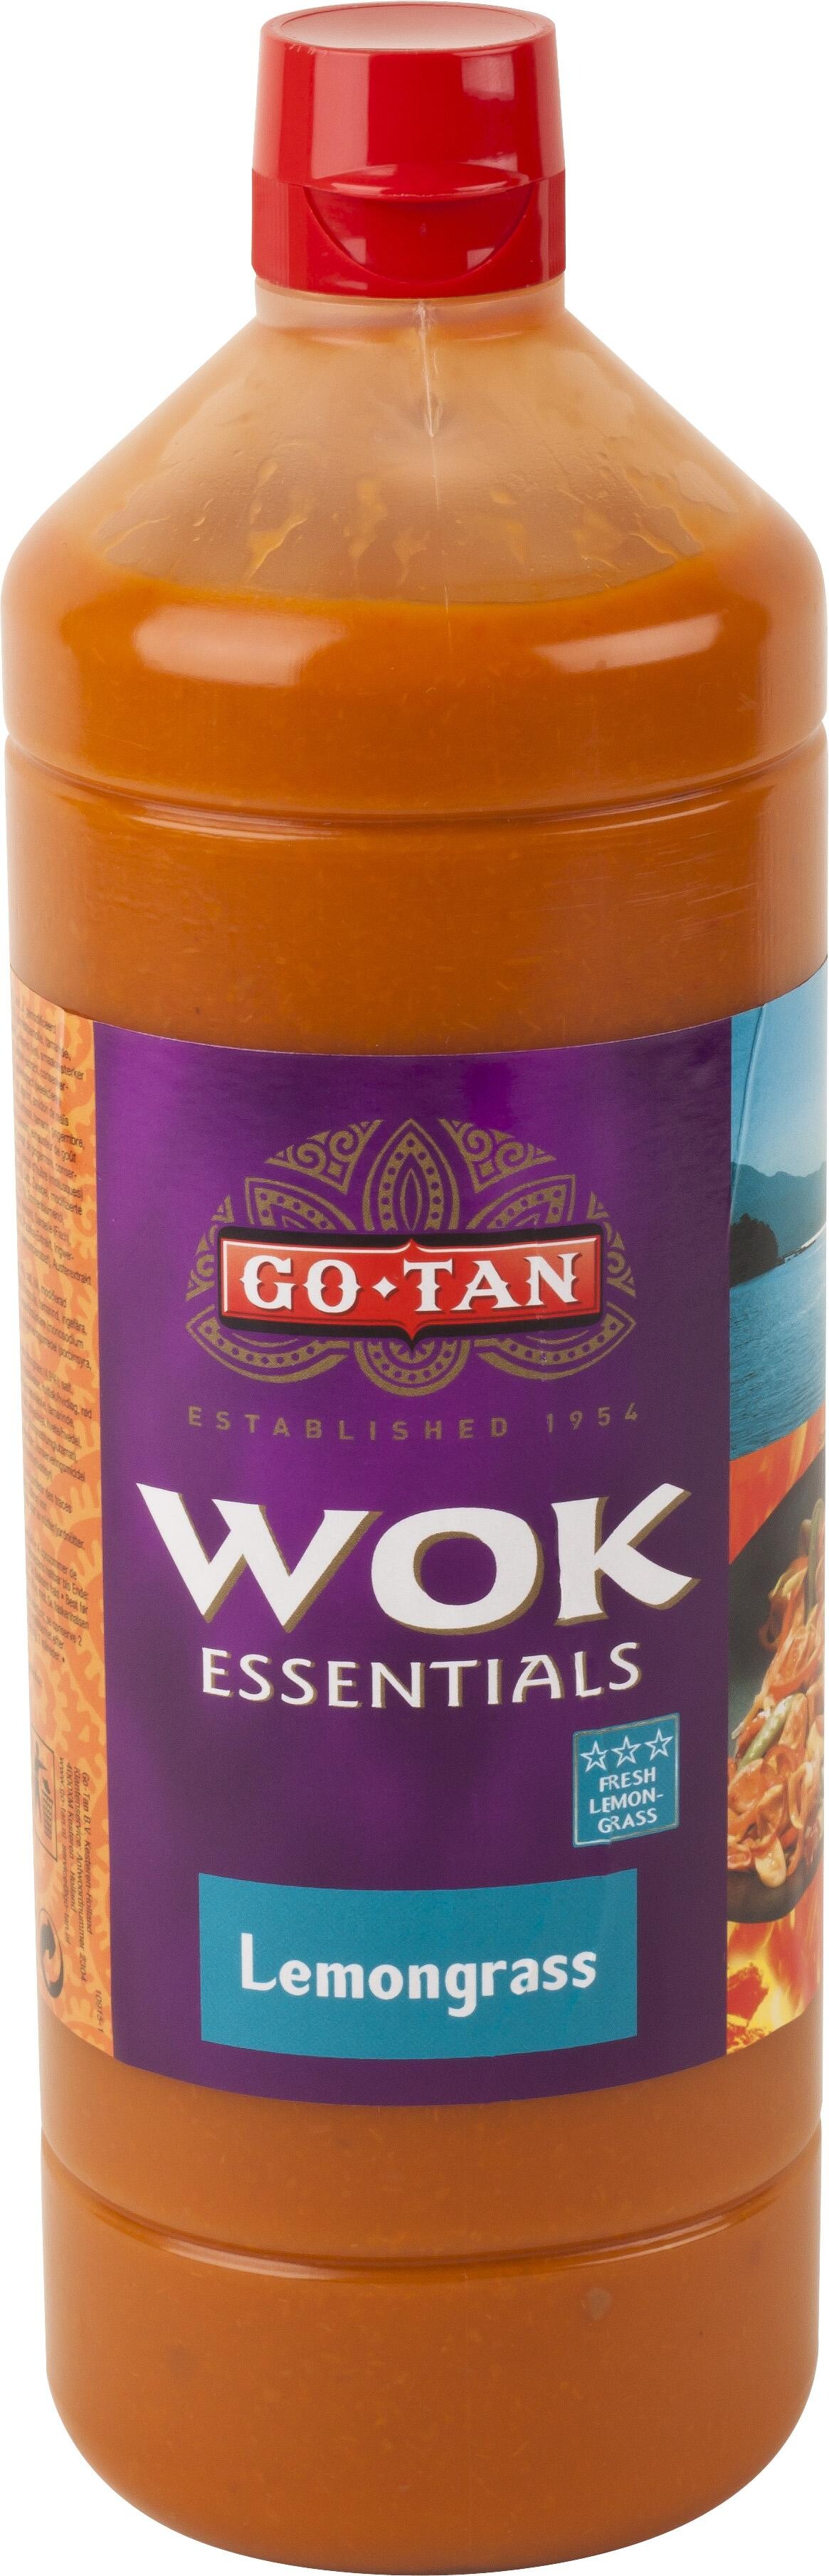 Wok essentials sauce Lemongrass 1L Go Tan